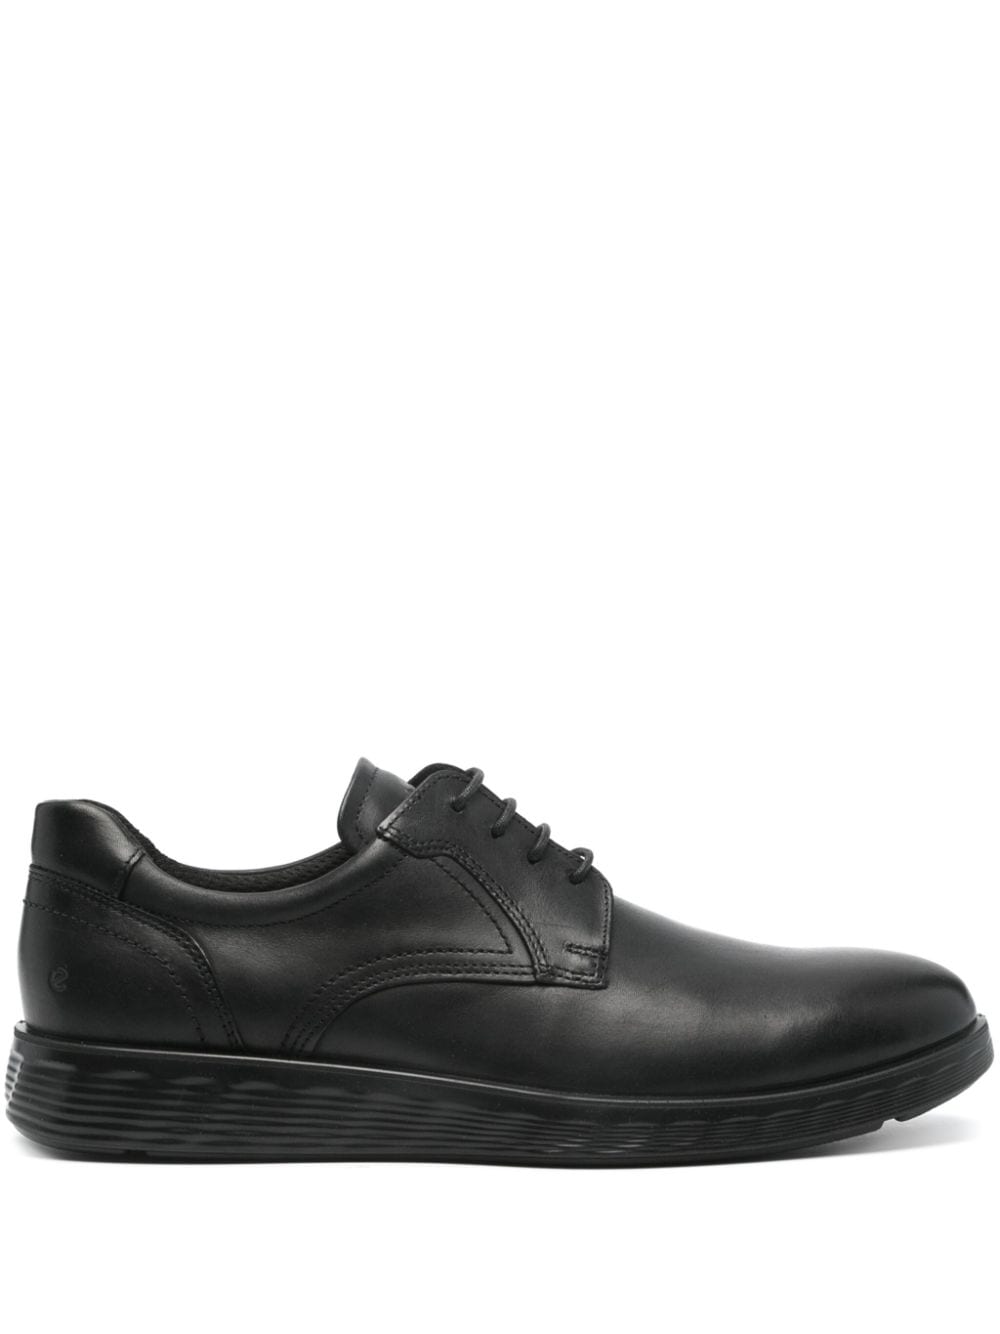 Ecco Lite Hybrid Oxford Shoes In Black